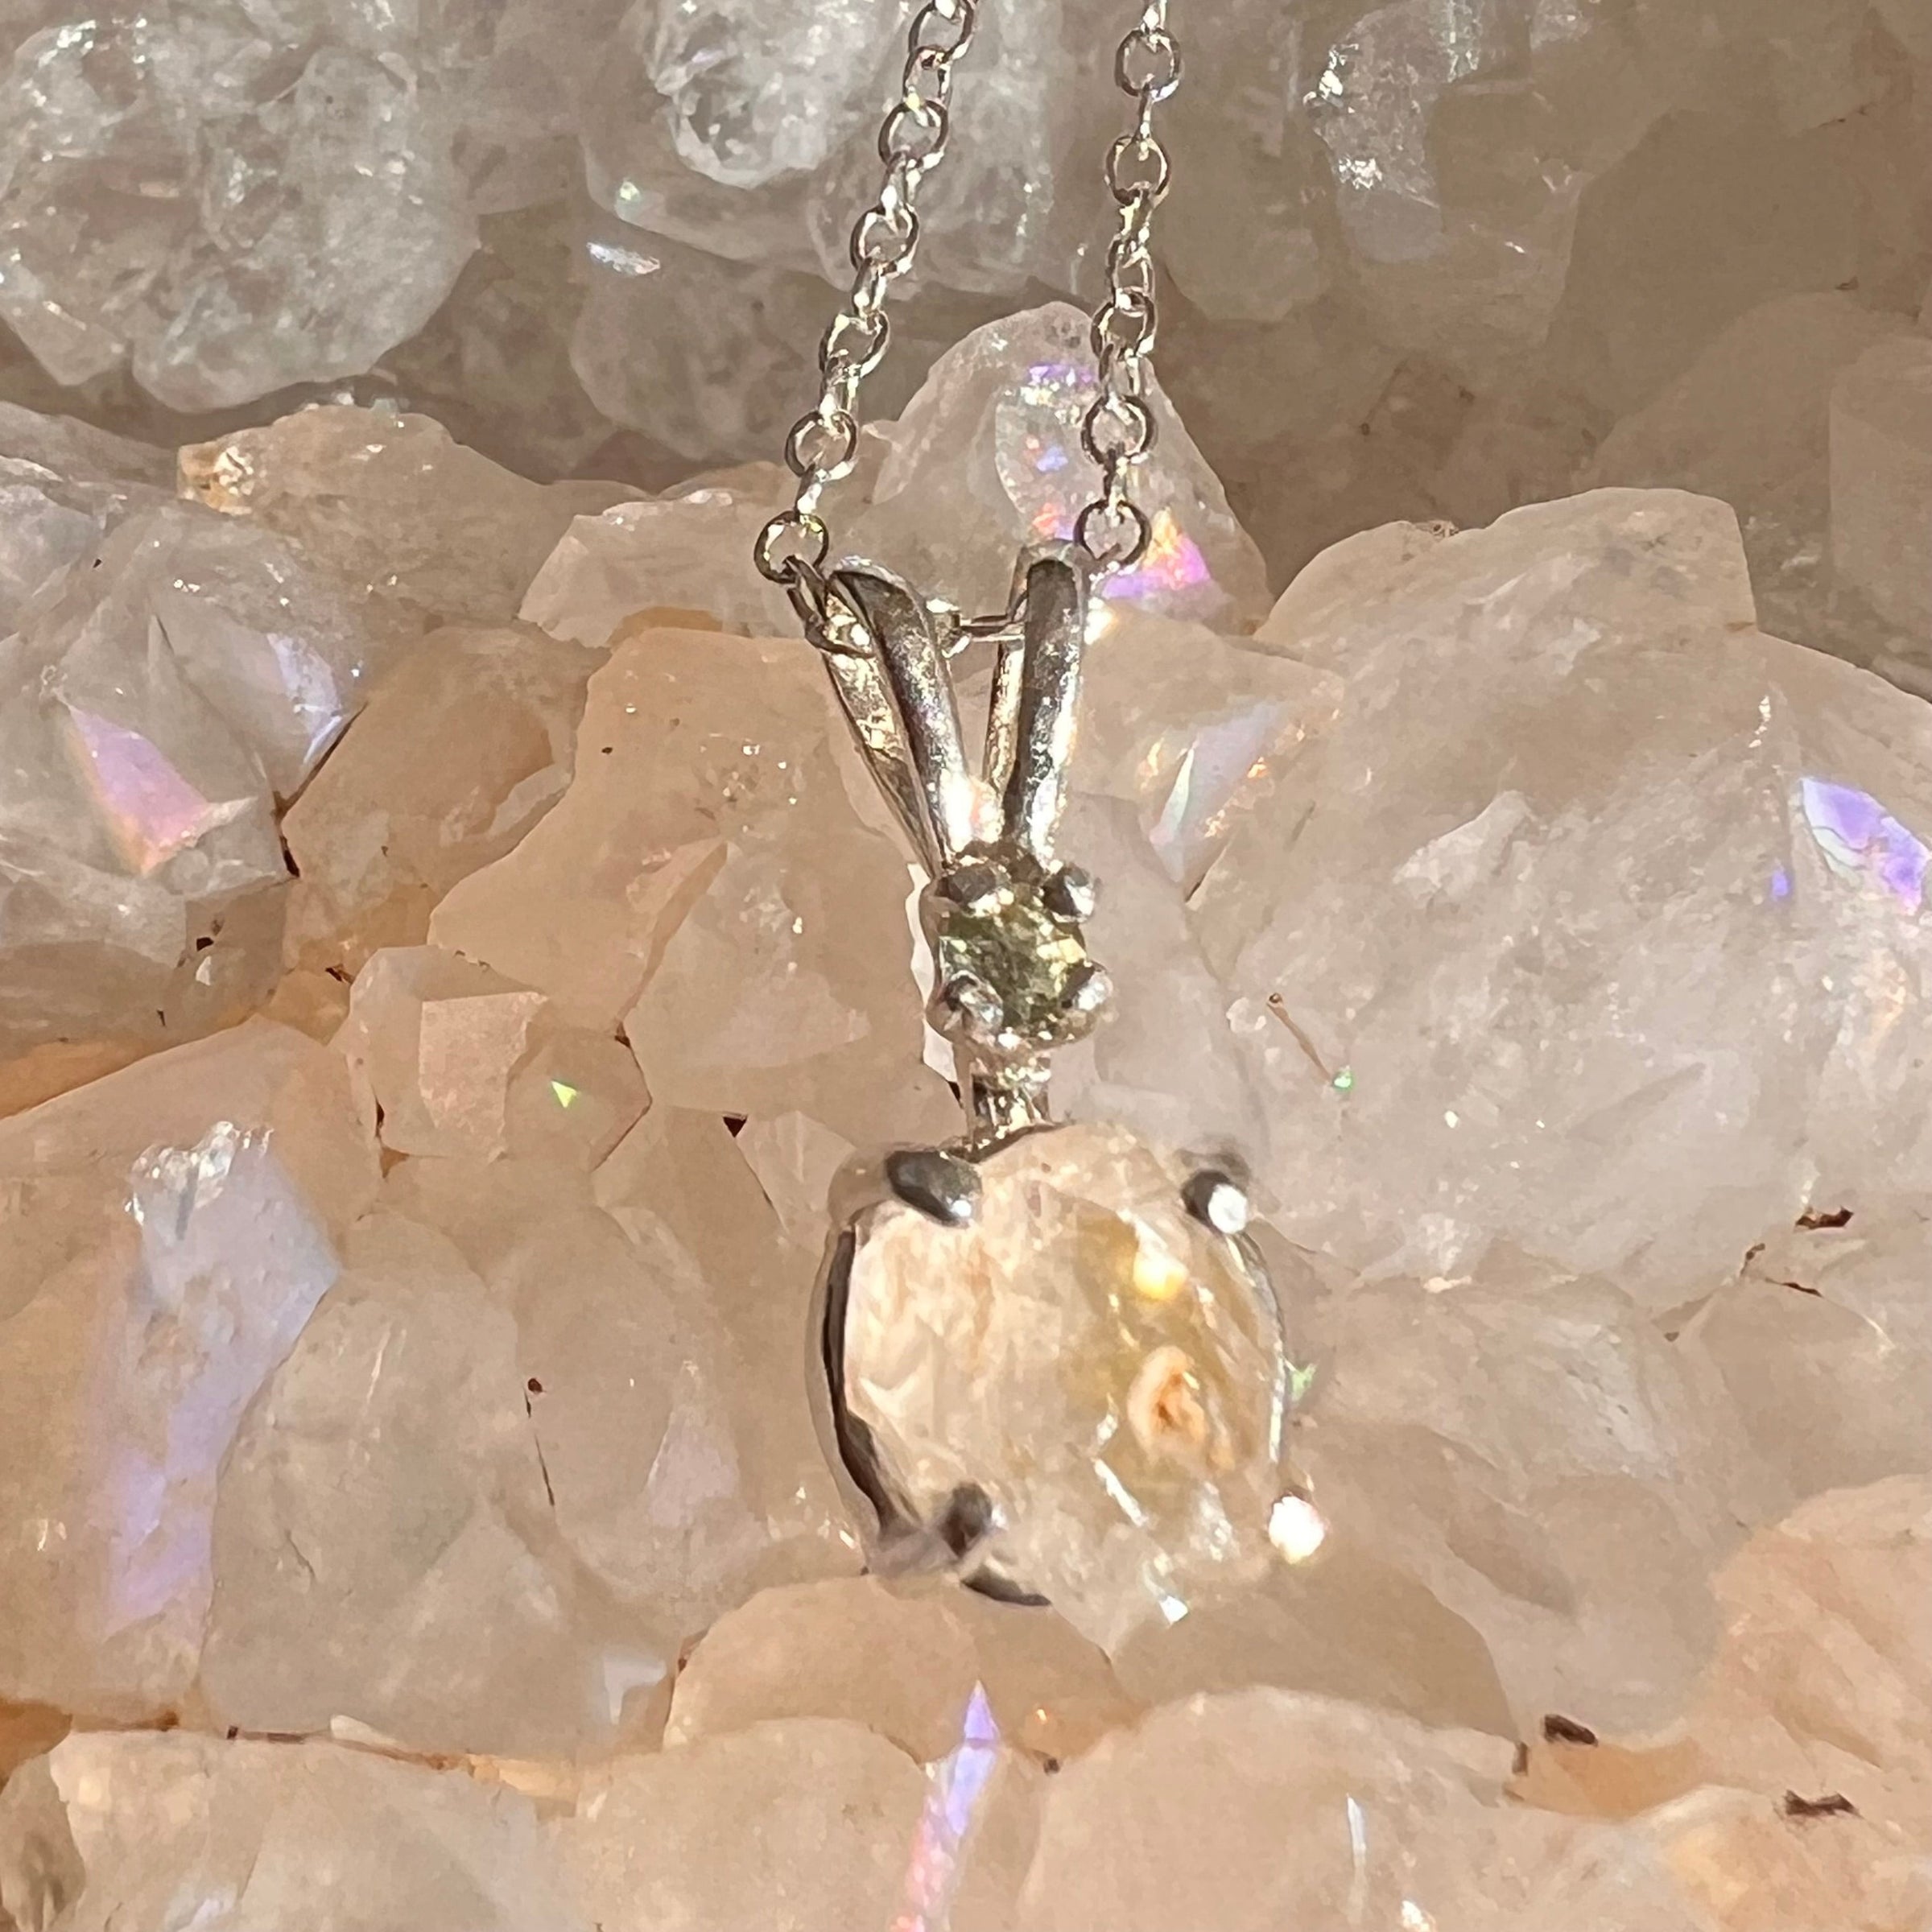 Anandalite & Moldavite Necklace Sterling #6002-Moldavite Life